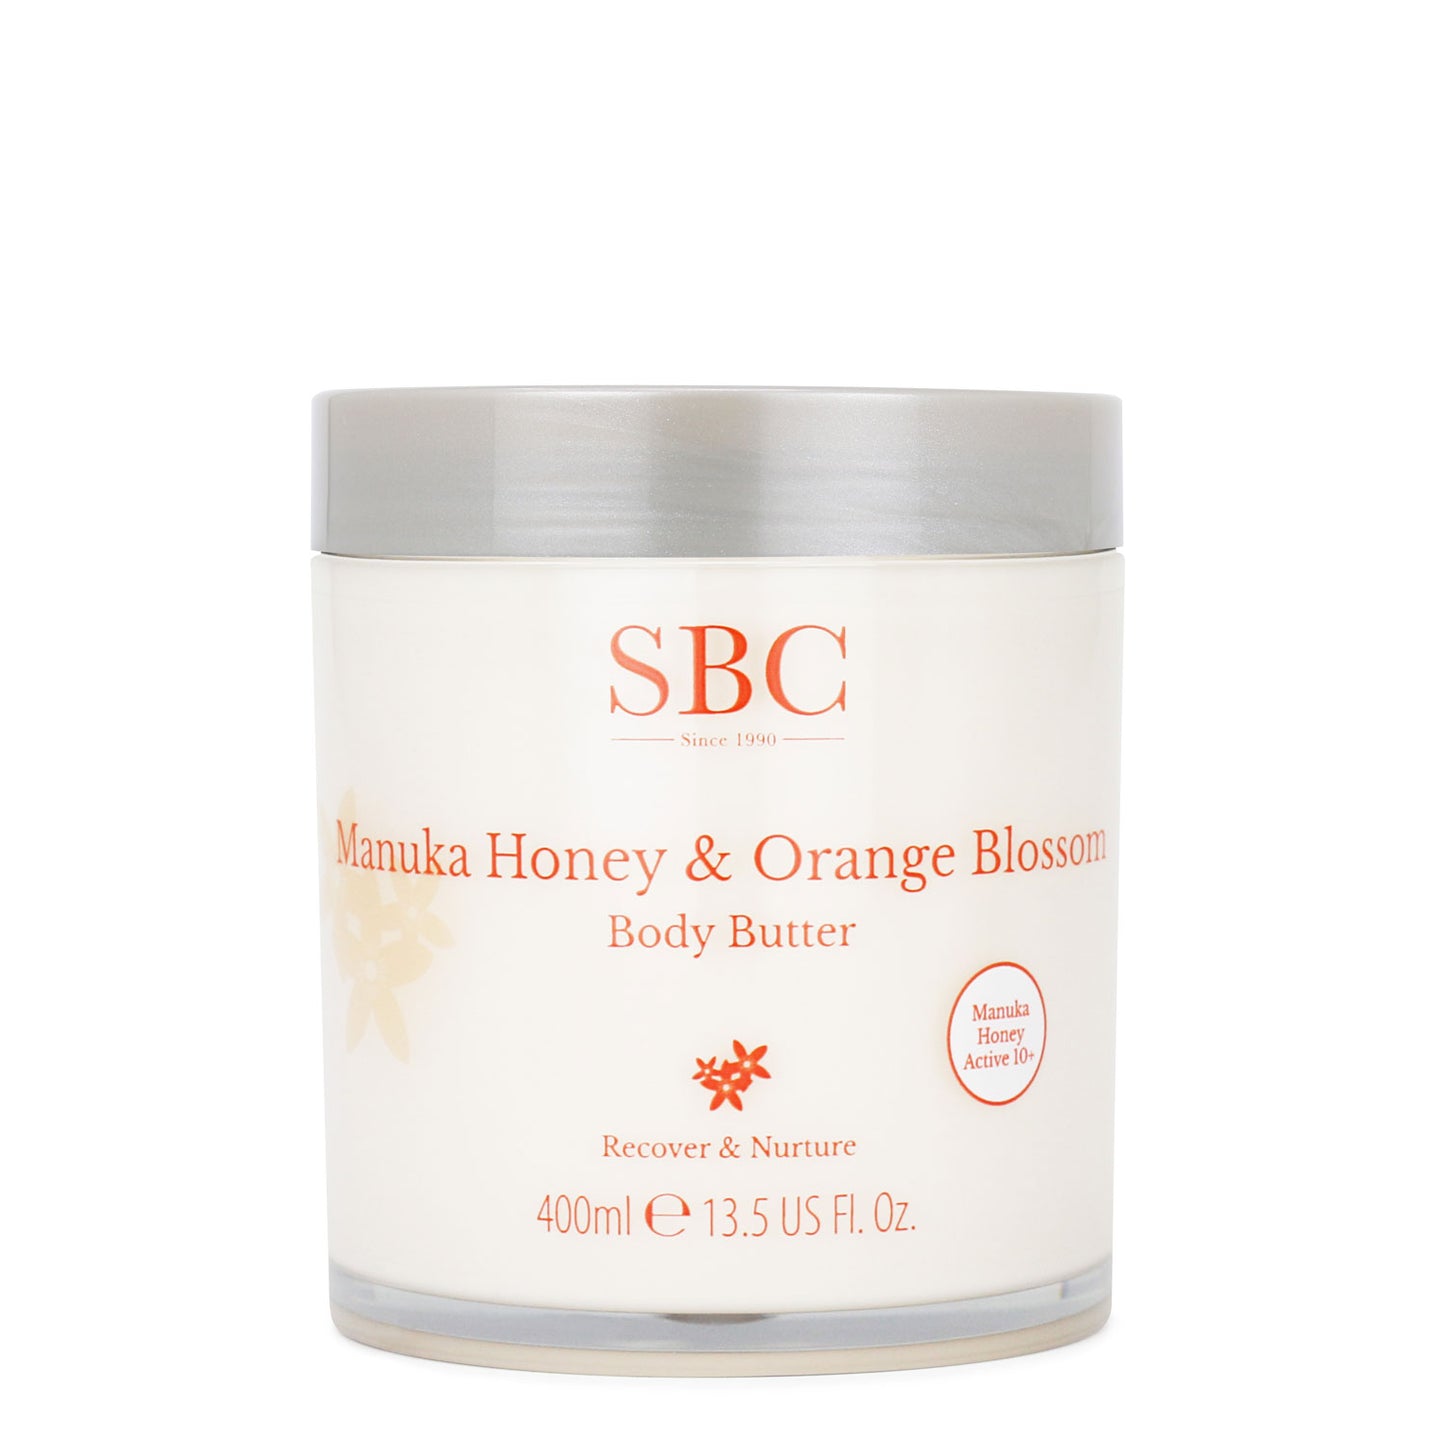 Manuka Honey & Orange Blossom Body Butter 400ml on a white background